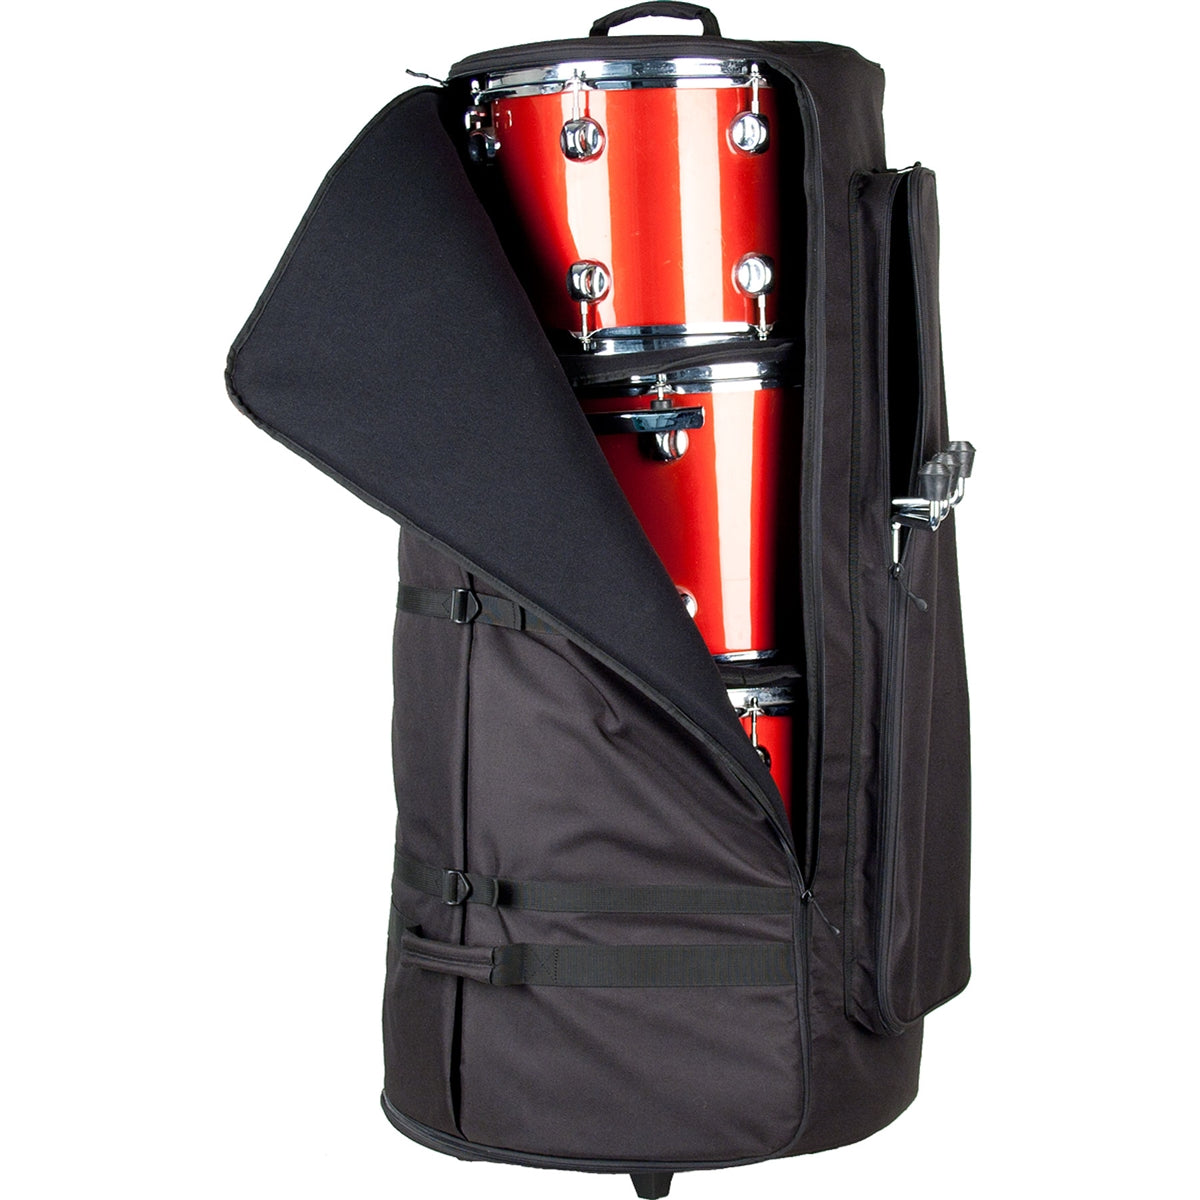 PROTEC Deluxe Multi-Tom Bag w/wheels